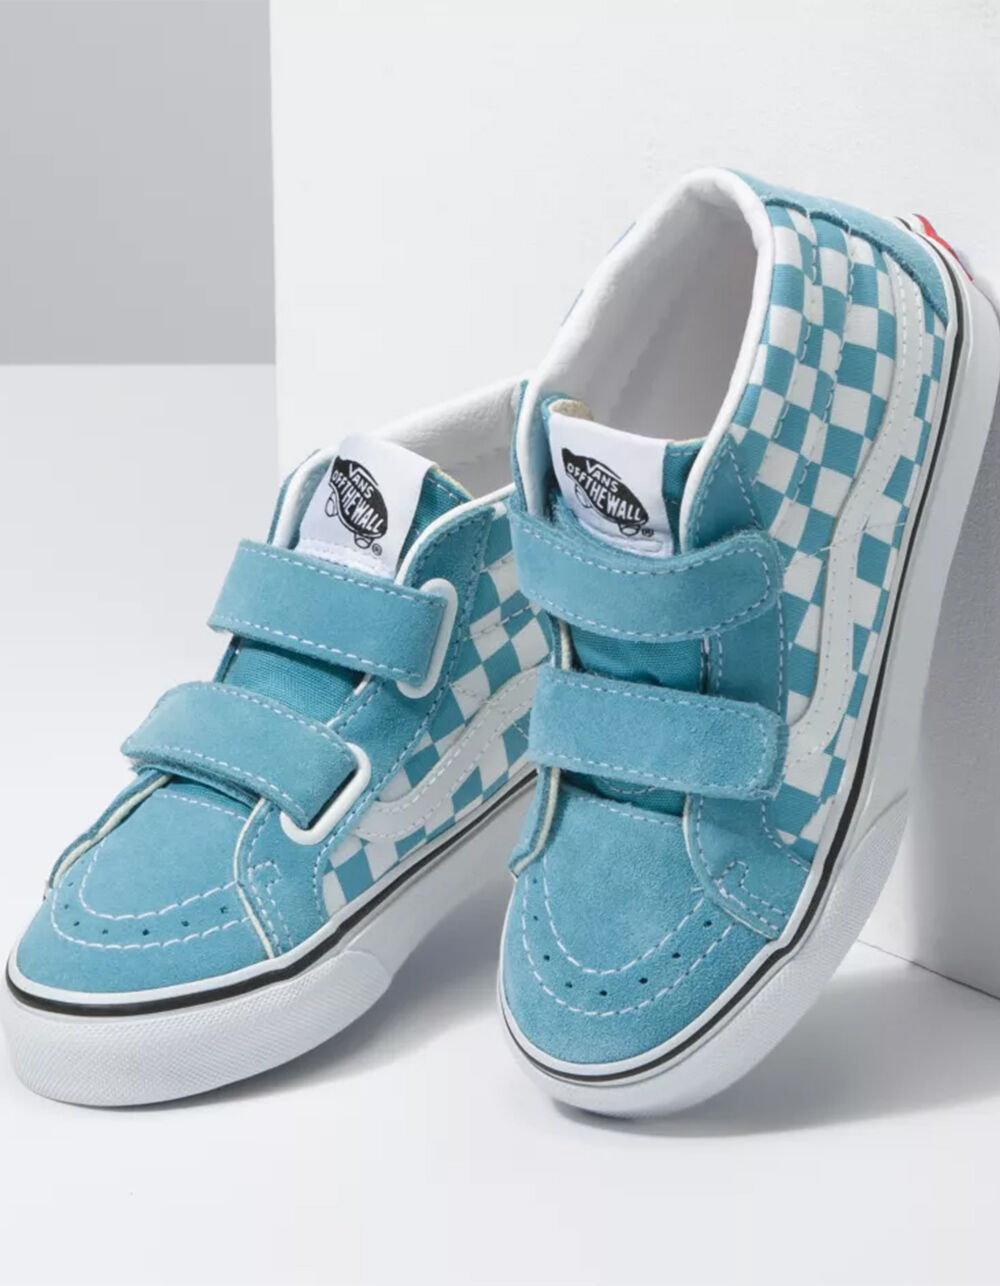 VANS Checkerboard Sk8-Mid Reissue Velcro Girls Shoes - DELPHINIUM BLUE ...